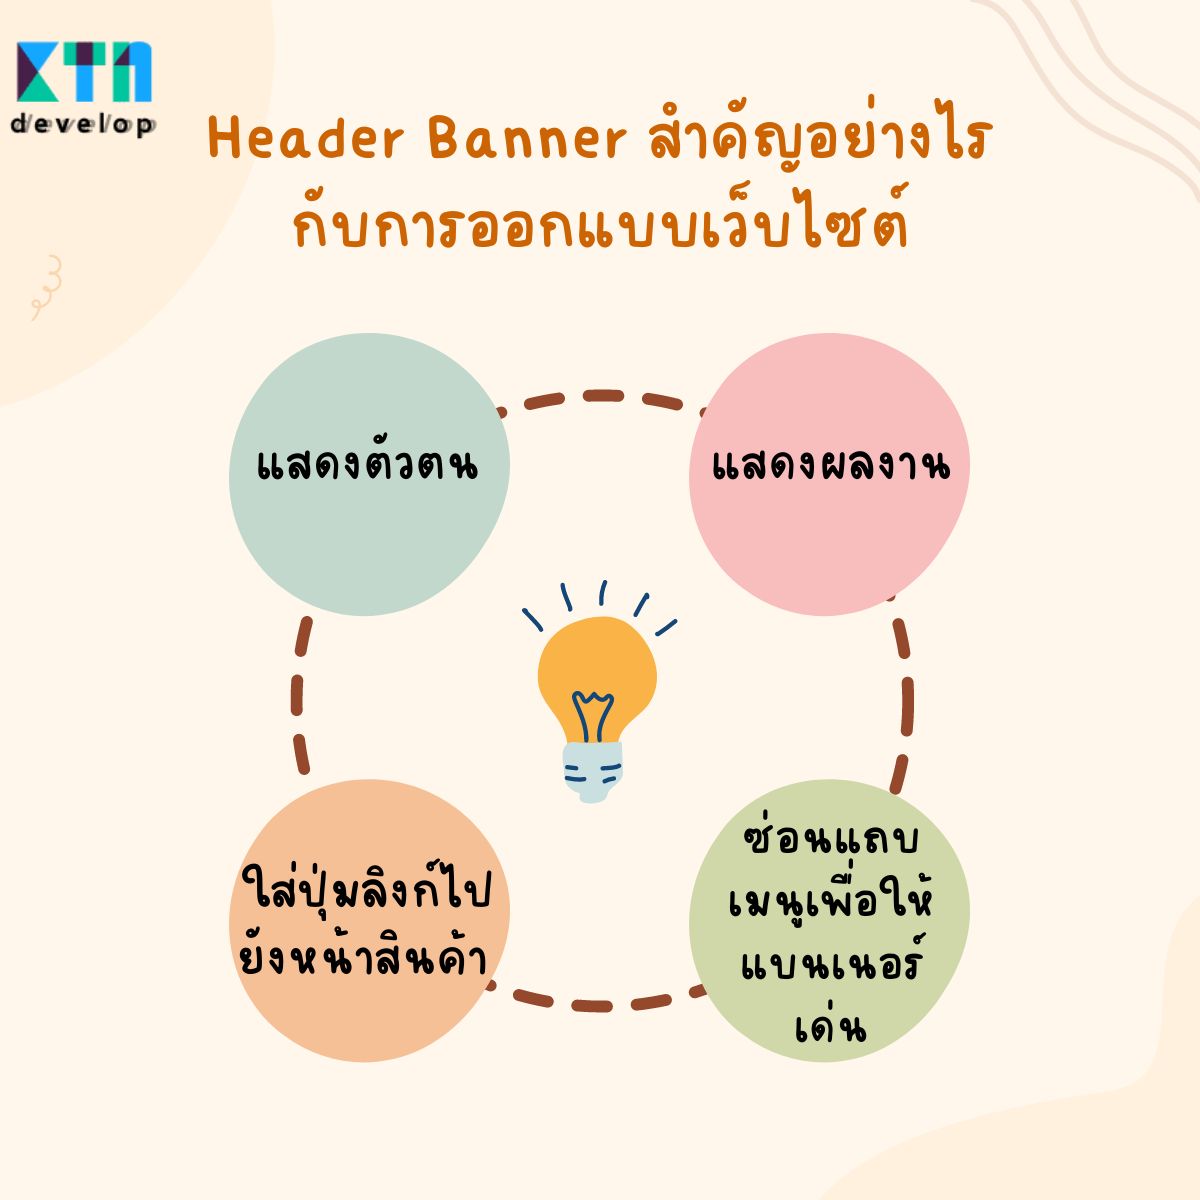 Header Banner สำคัญอย่างไรกับการออกแบบเว็บไซต์